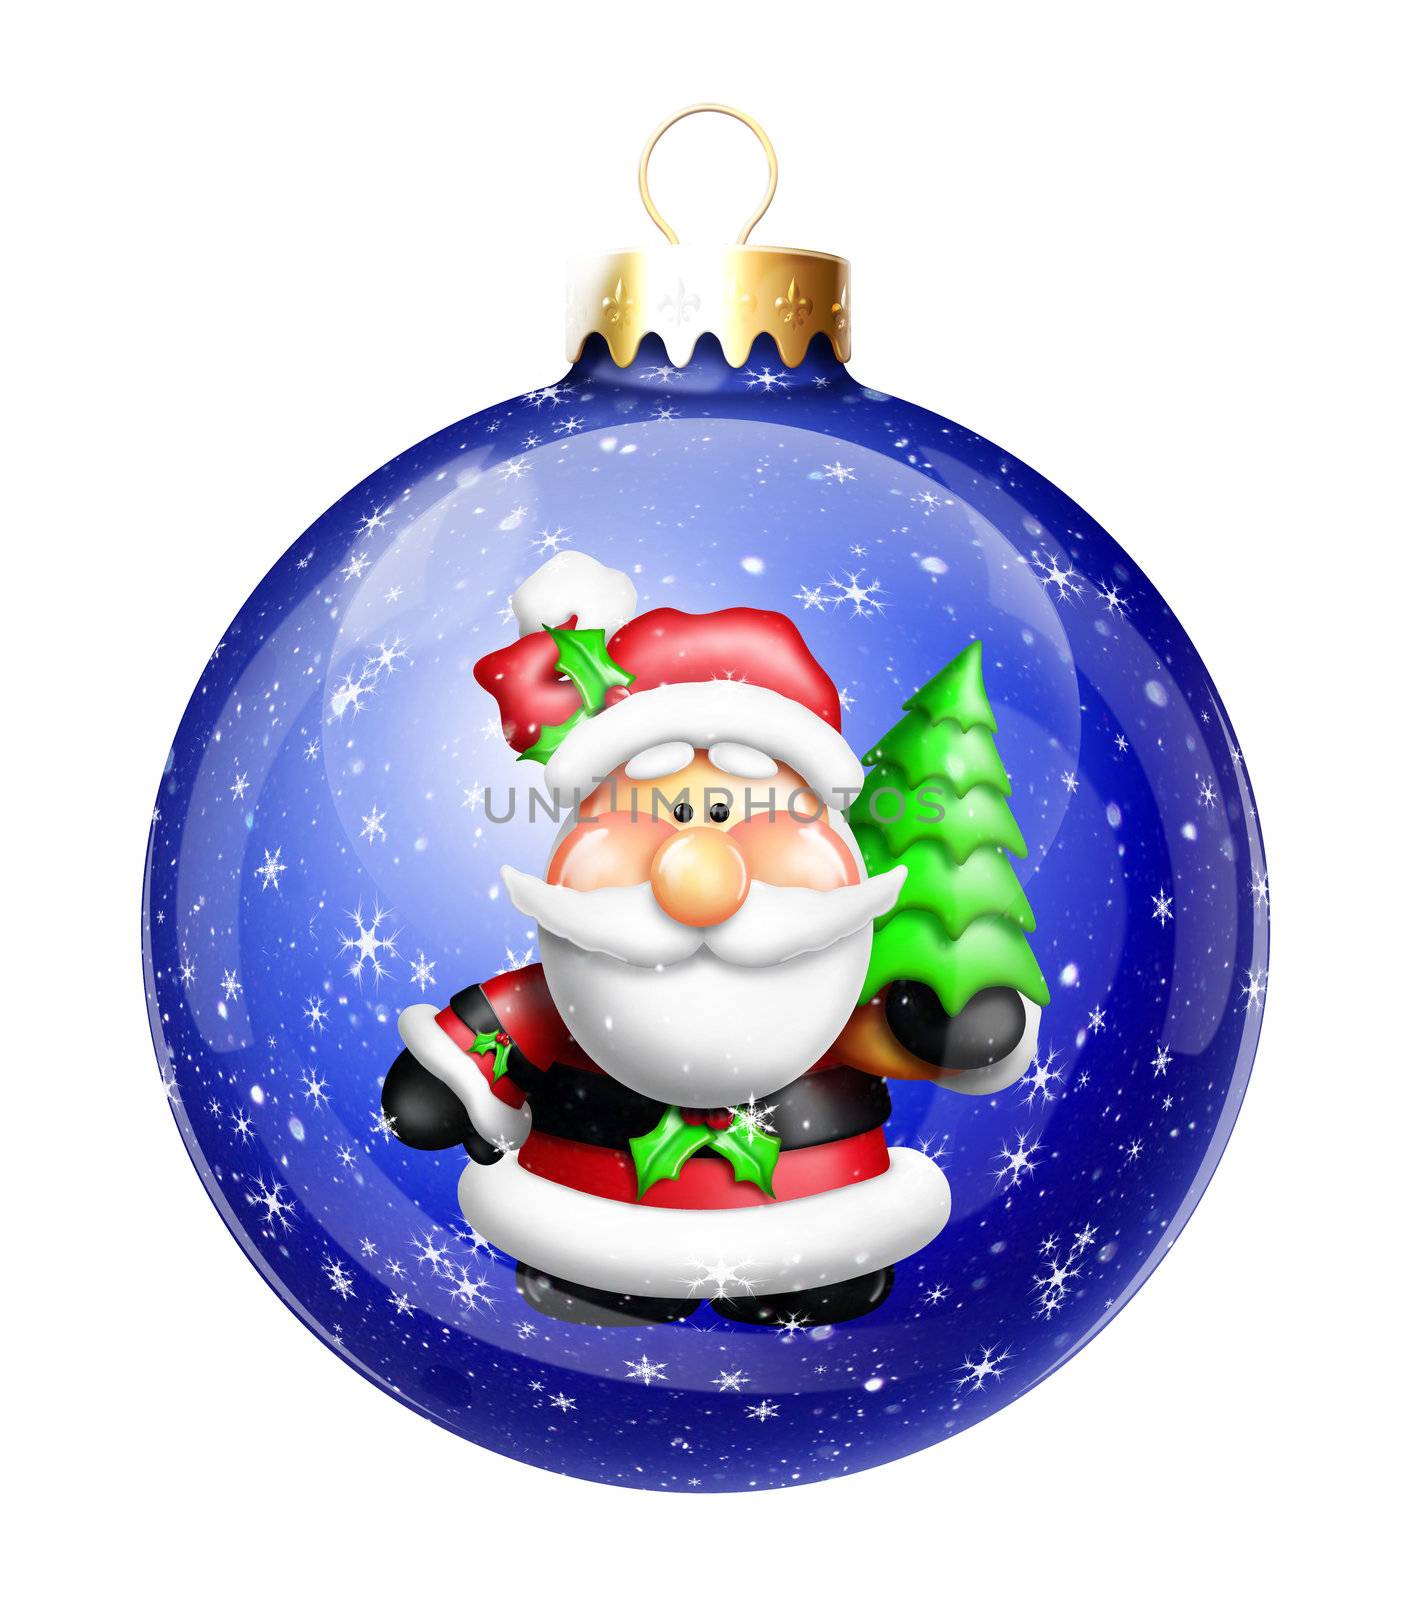 Gumdrop Cartoon Santa in Christmas Ball Ornament by komodoempire